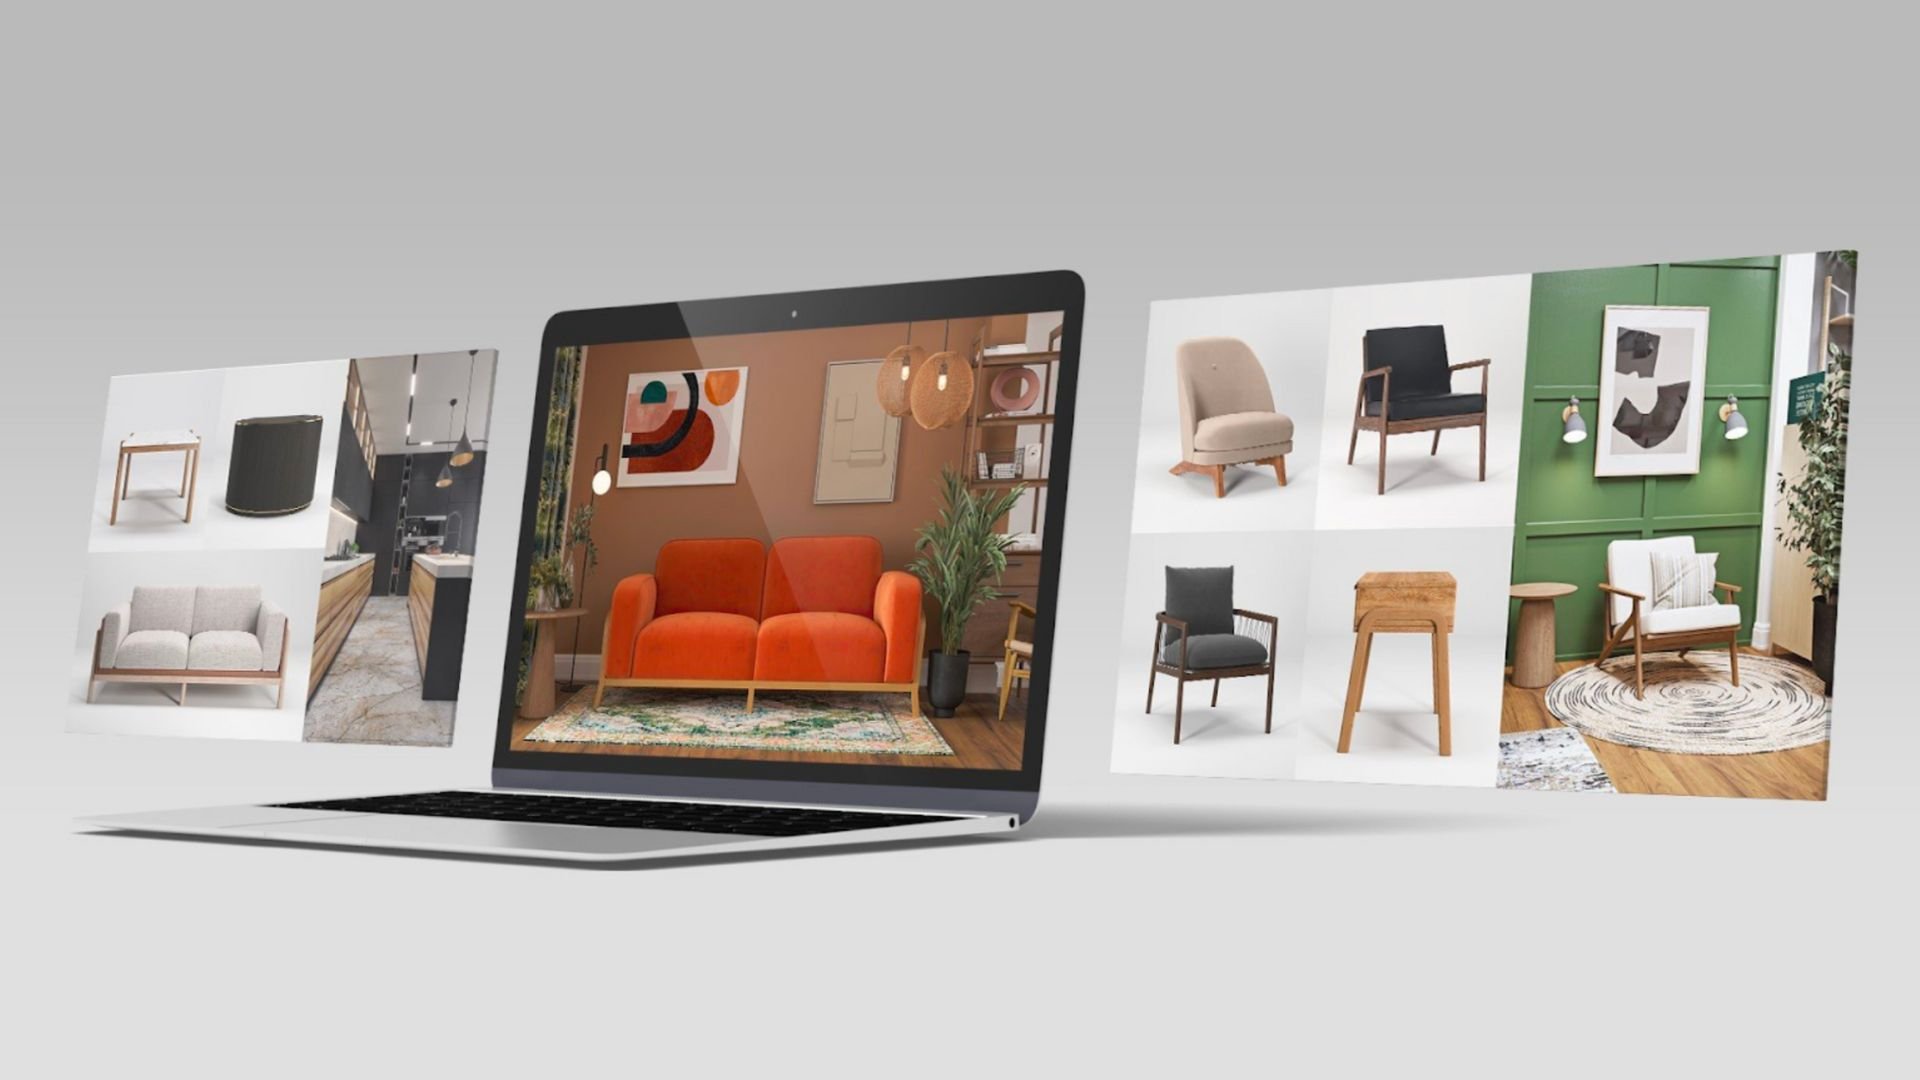 Integrating 3D Modelling for an array of furniture displayed through an online platform